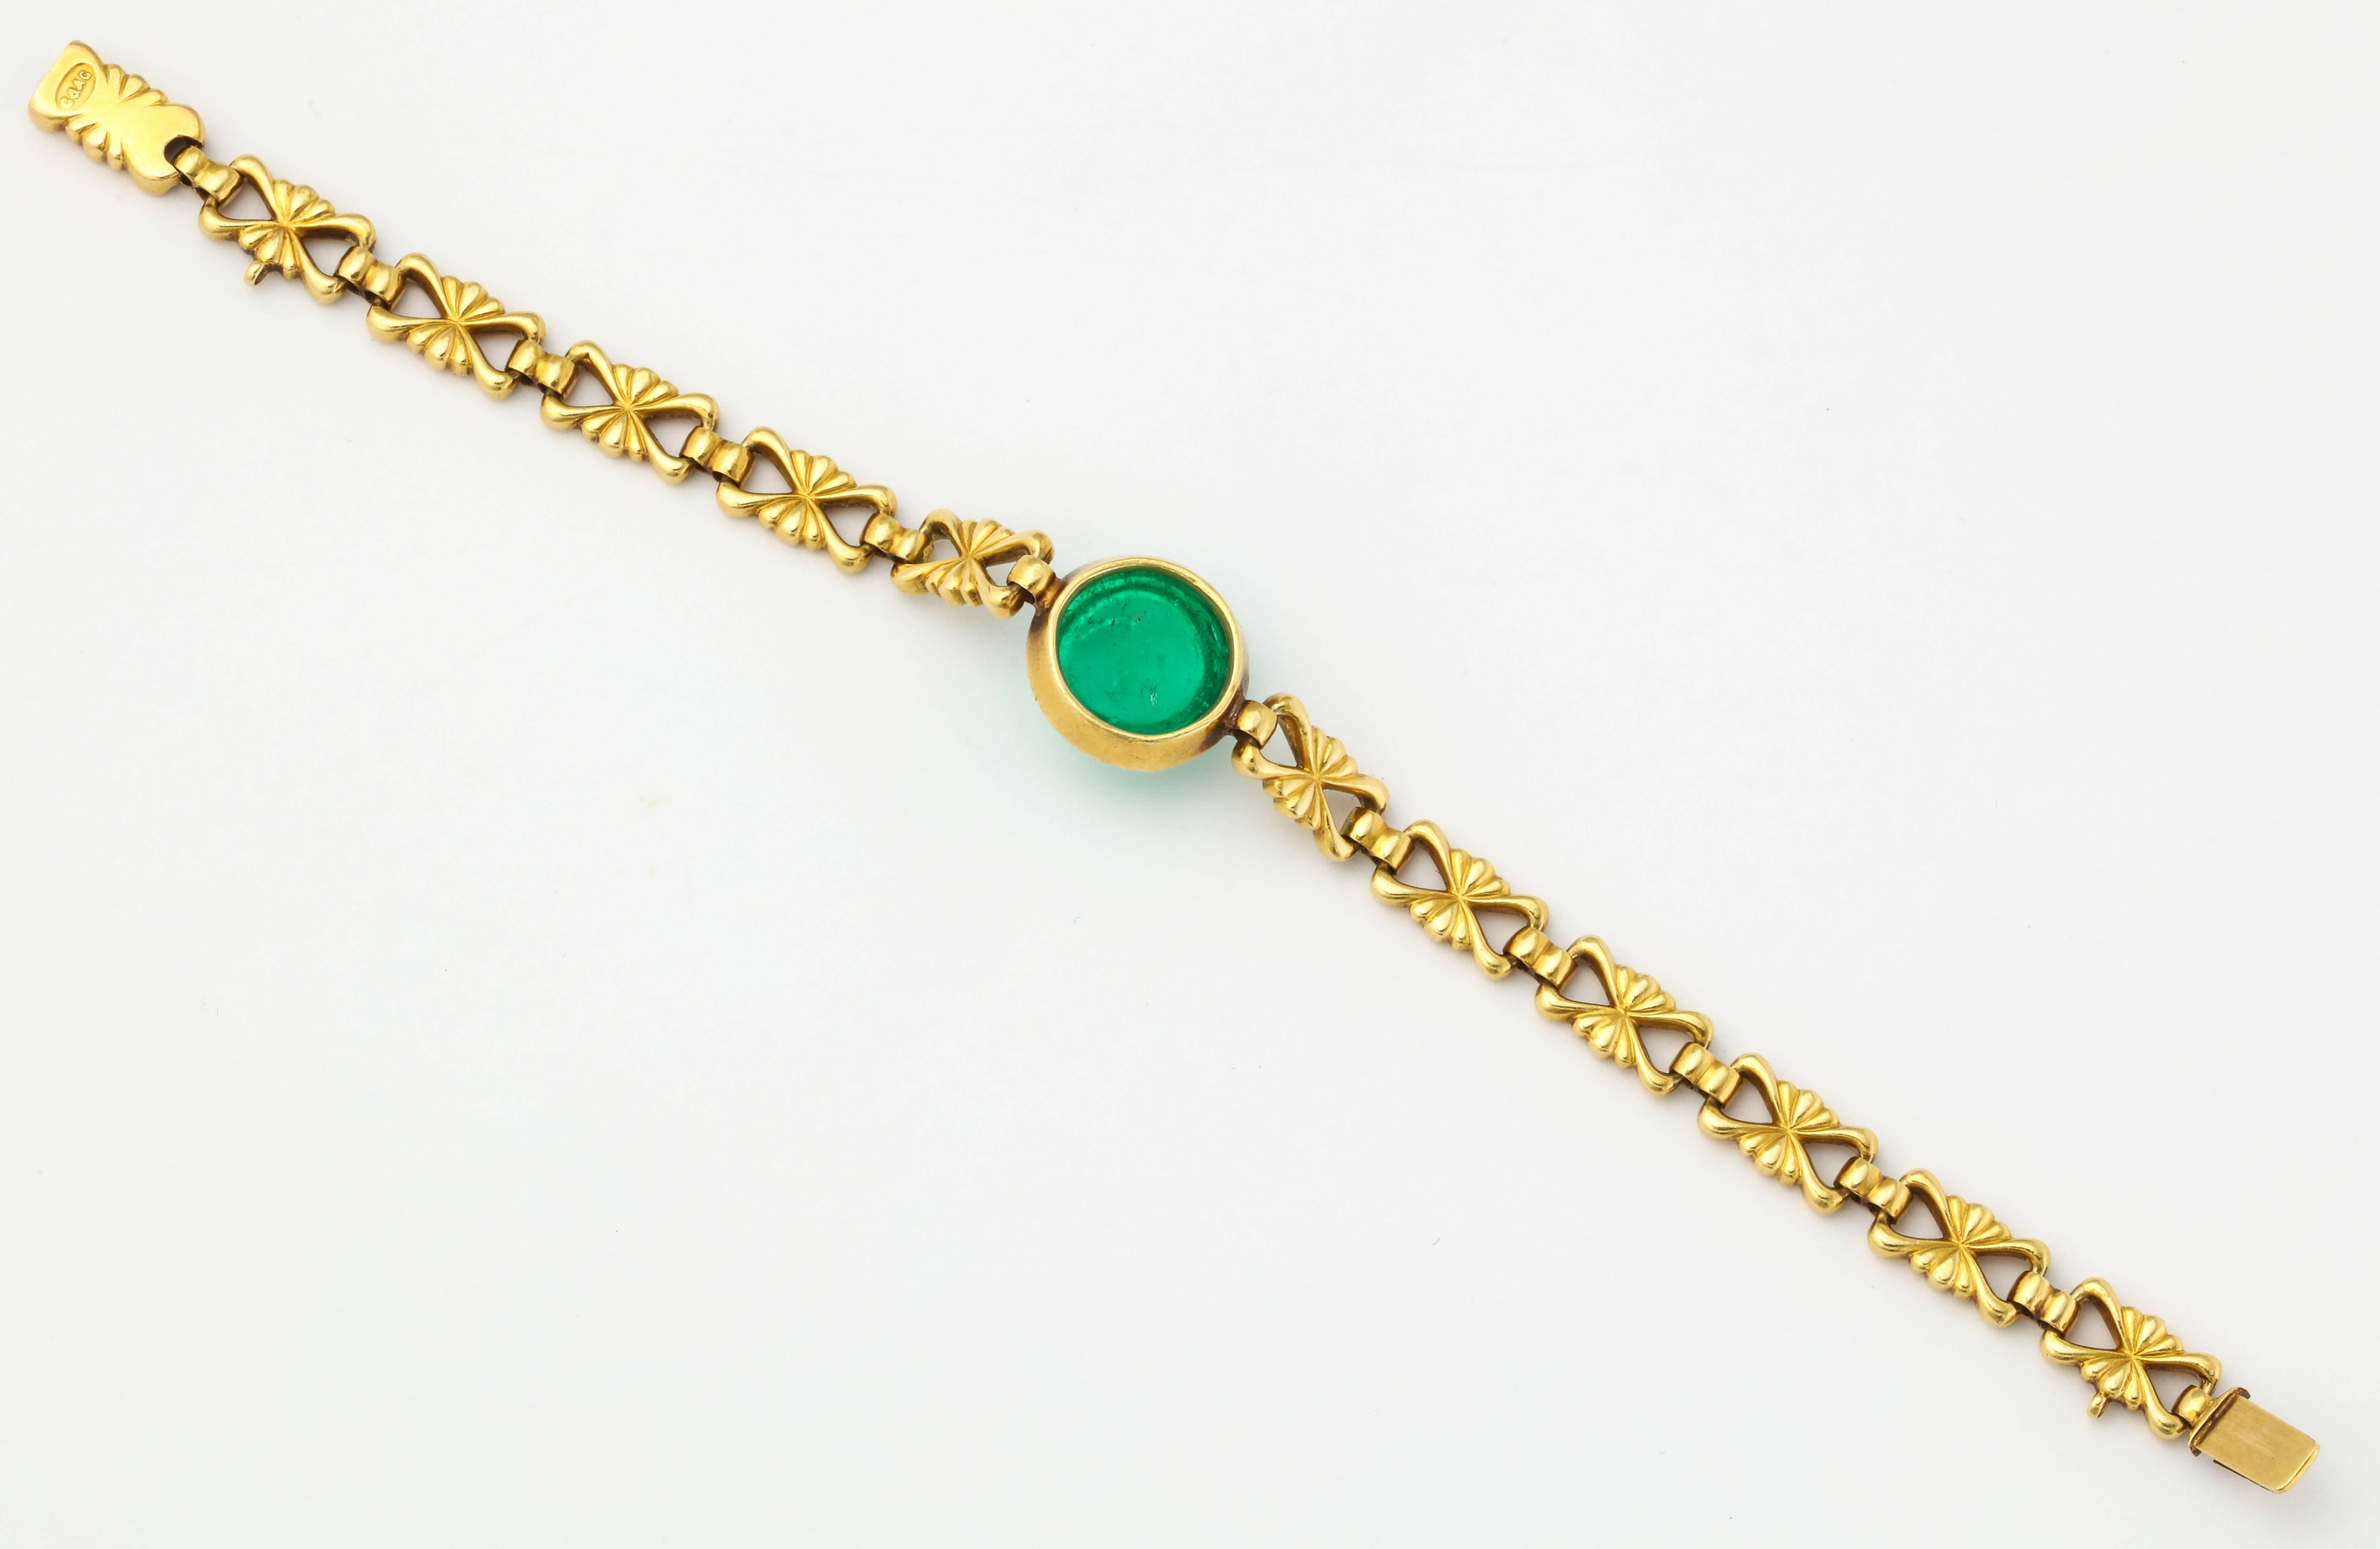 Cabochon Emerald Bracelet by Carlo Giuliano 

Center emerald approx 10 ct

Giuliano Makers Mark - C&AG

18 Karat Gold

Made in Italy Circa 1900